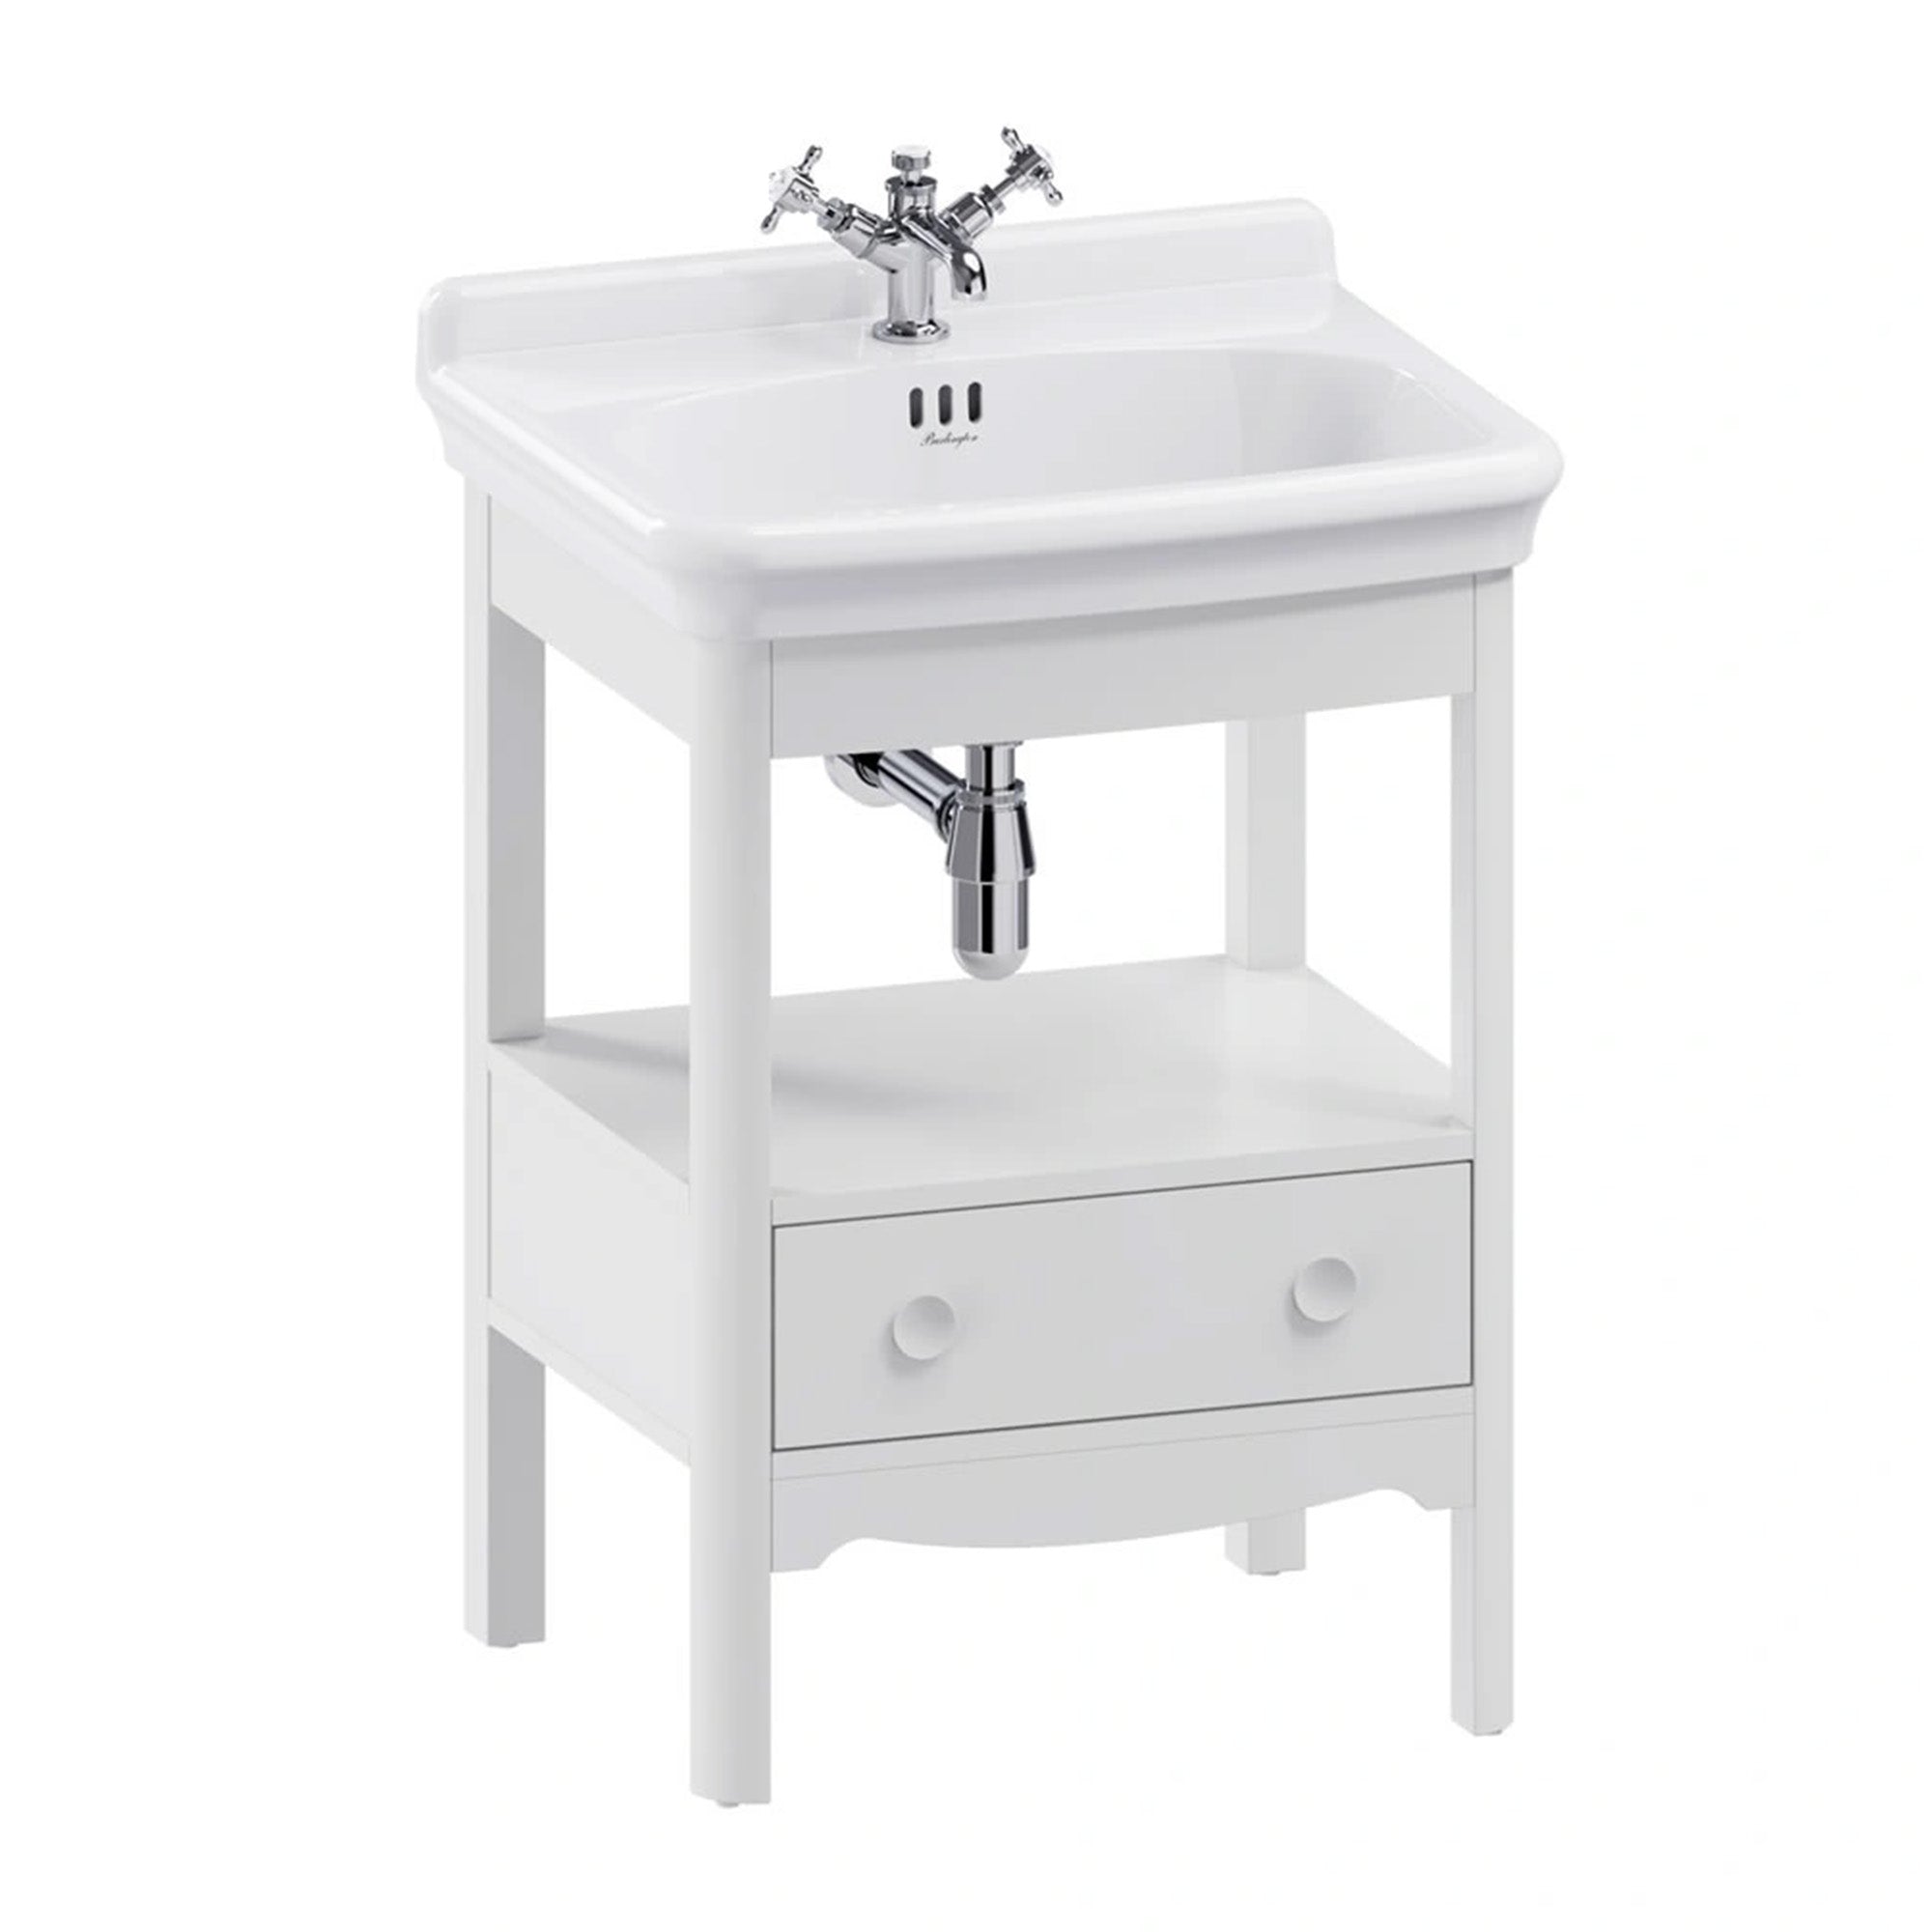 burlington guild 620 floorstanding single drawer vanity unit washbasin varley white